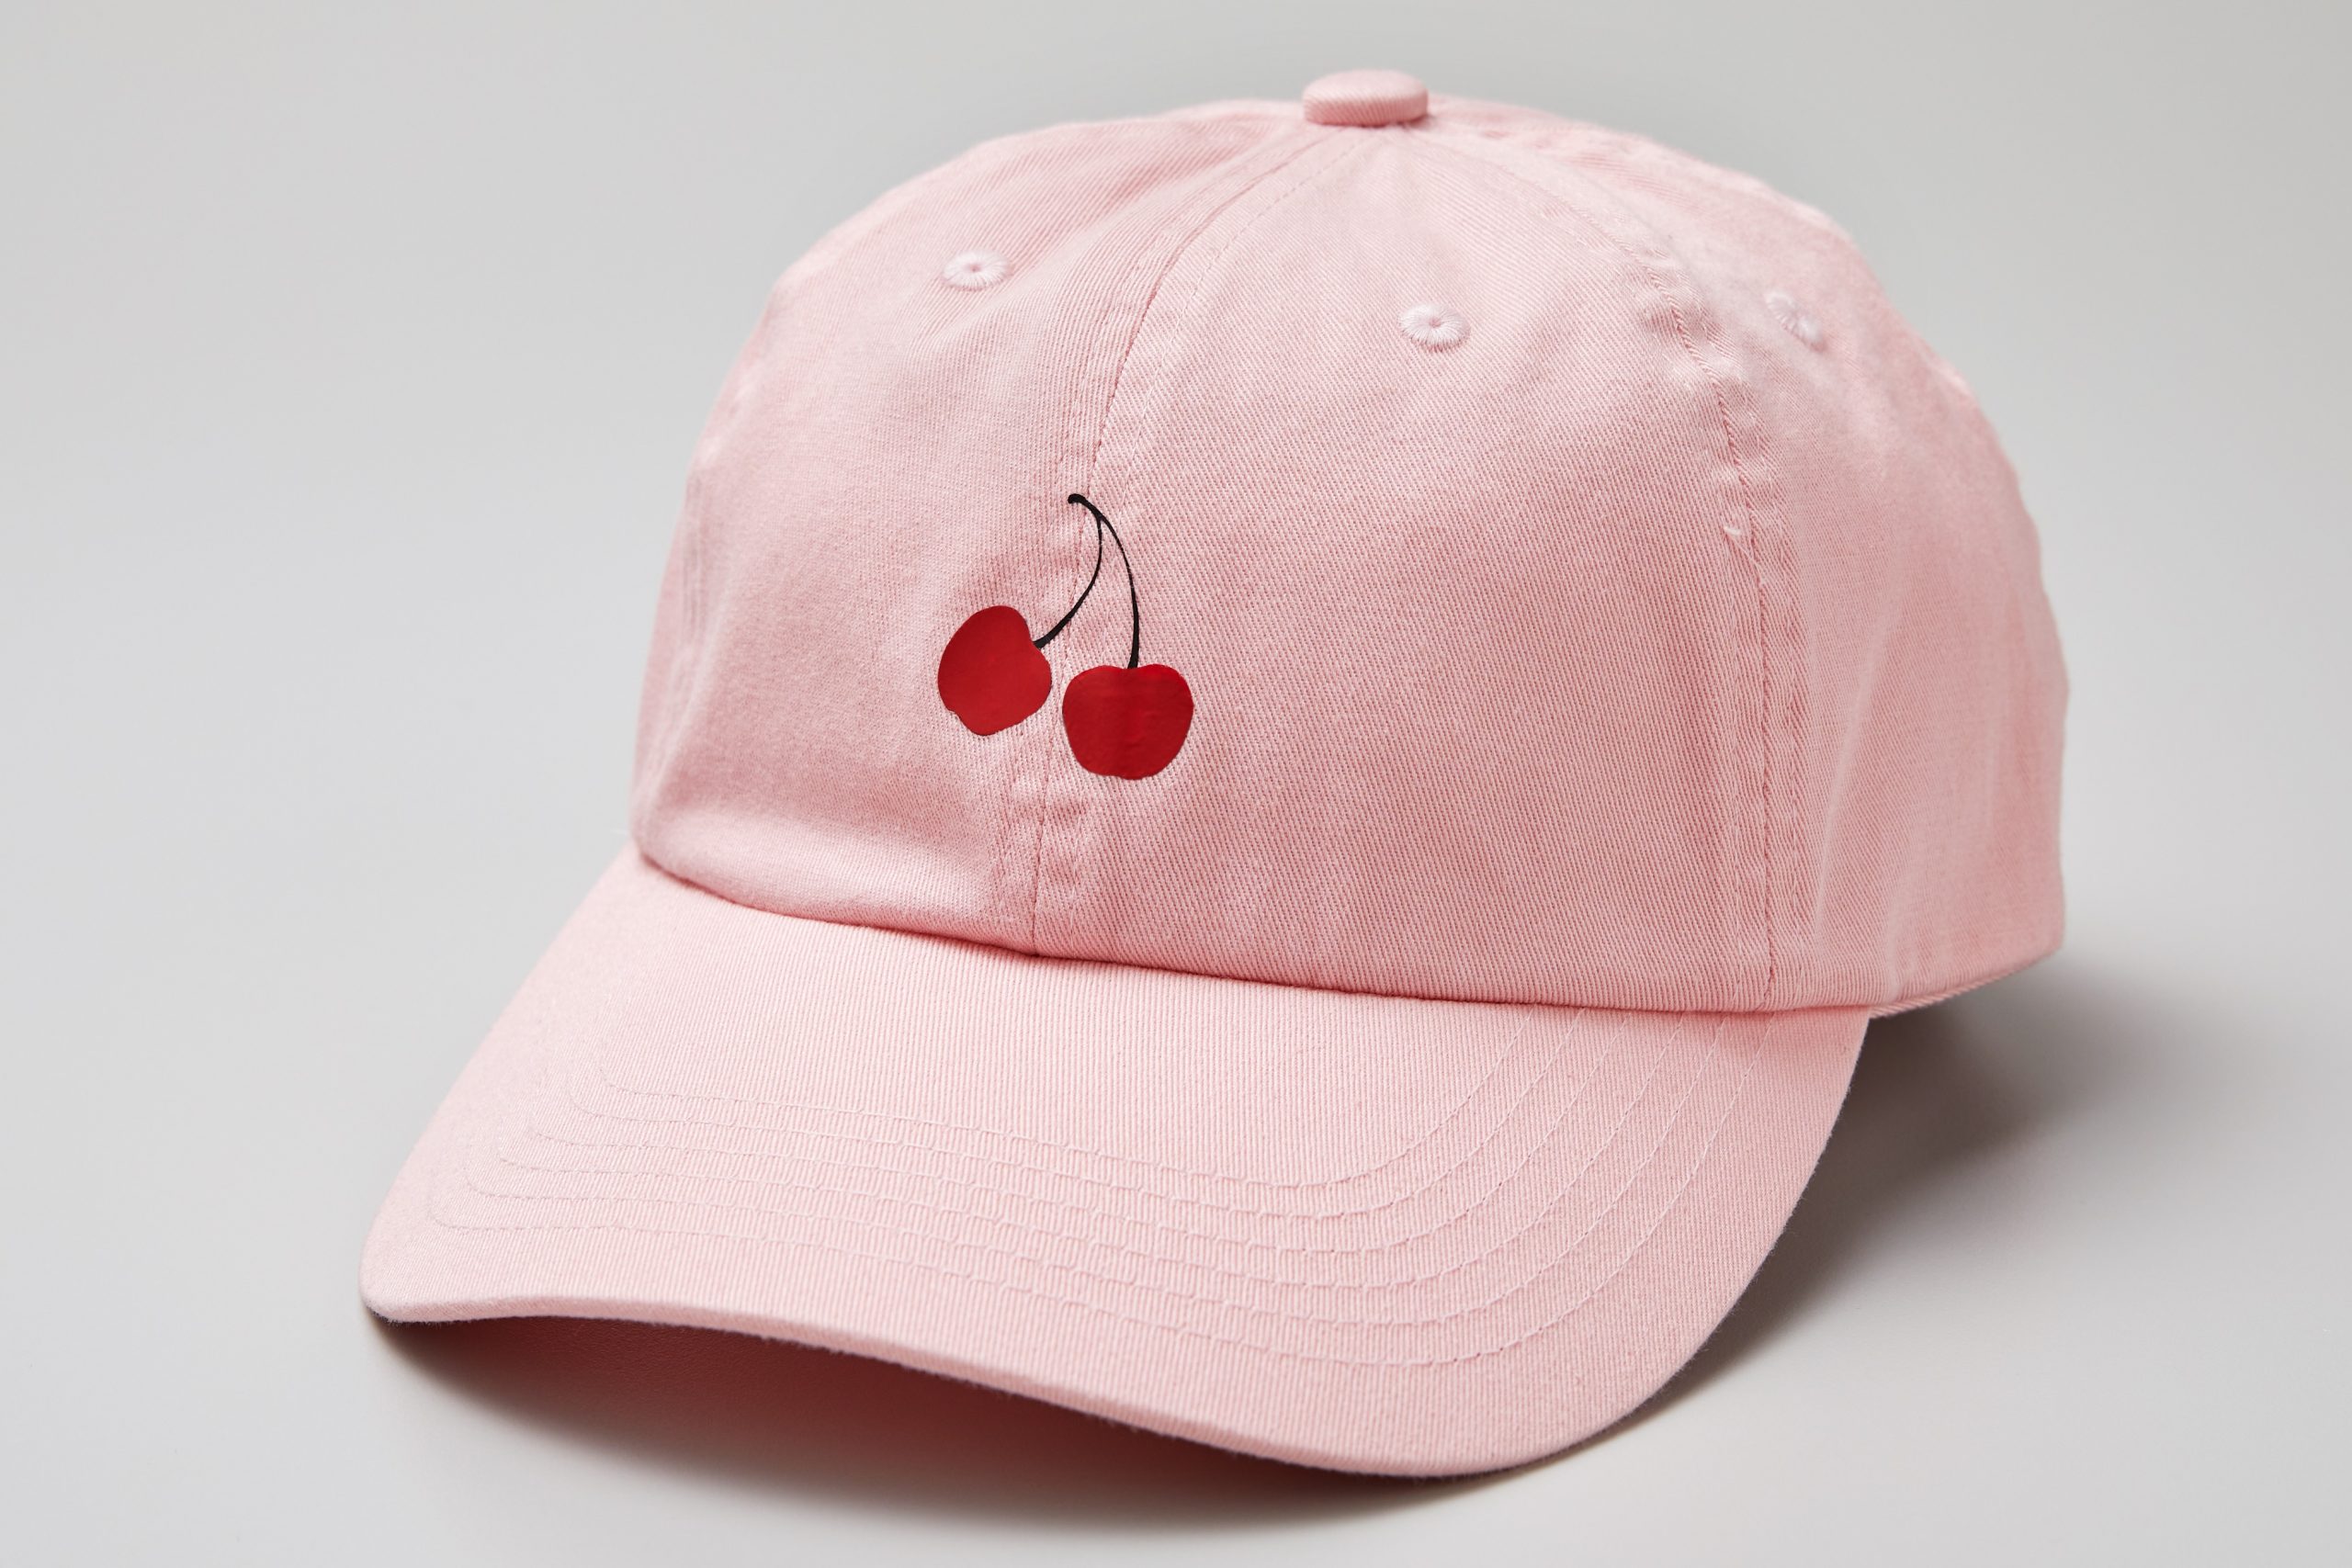 Cherry hat motif